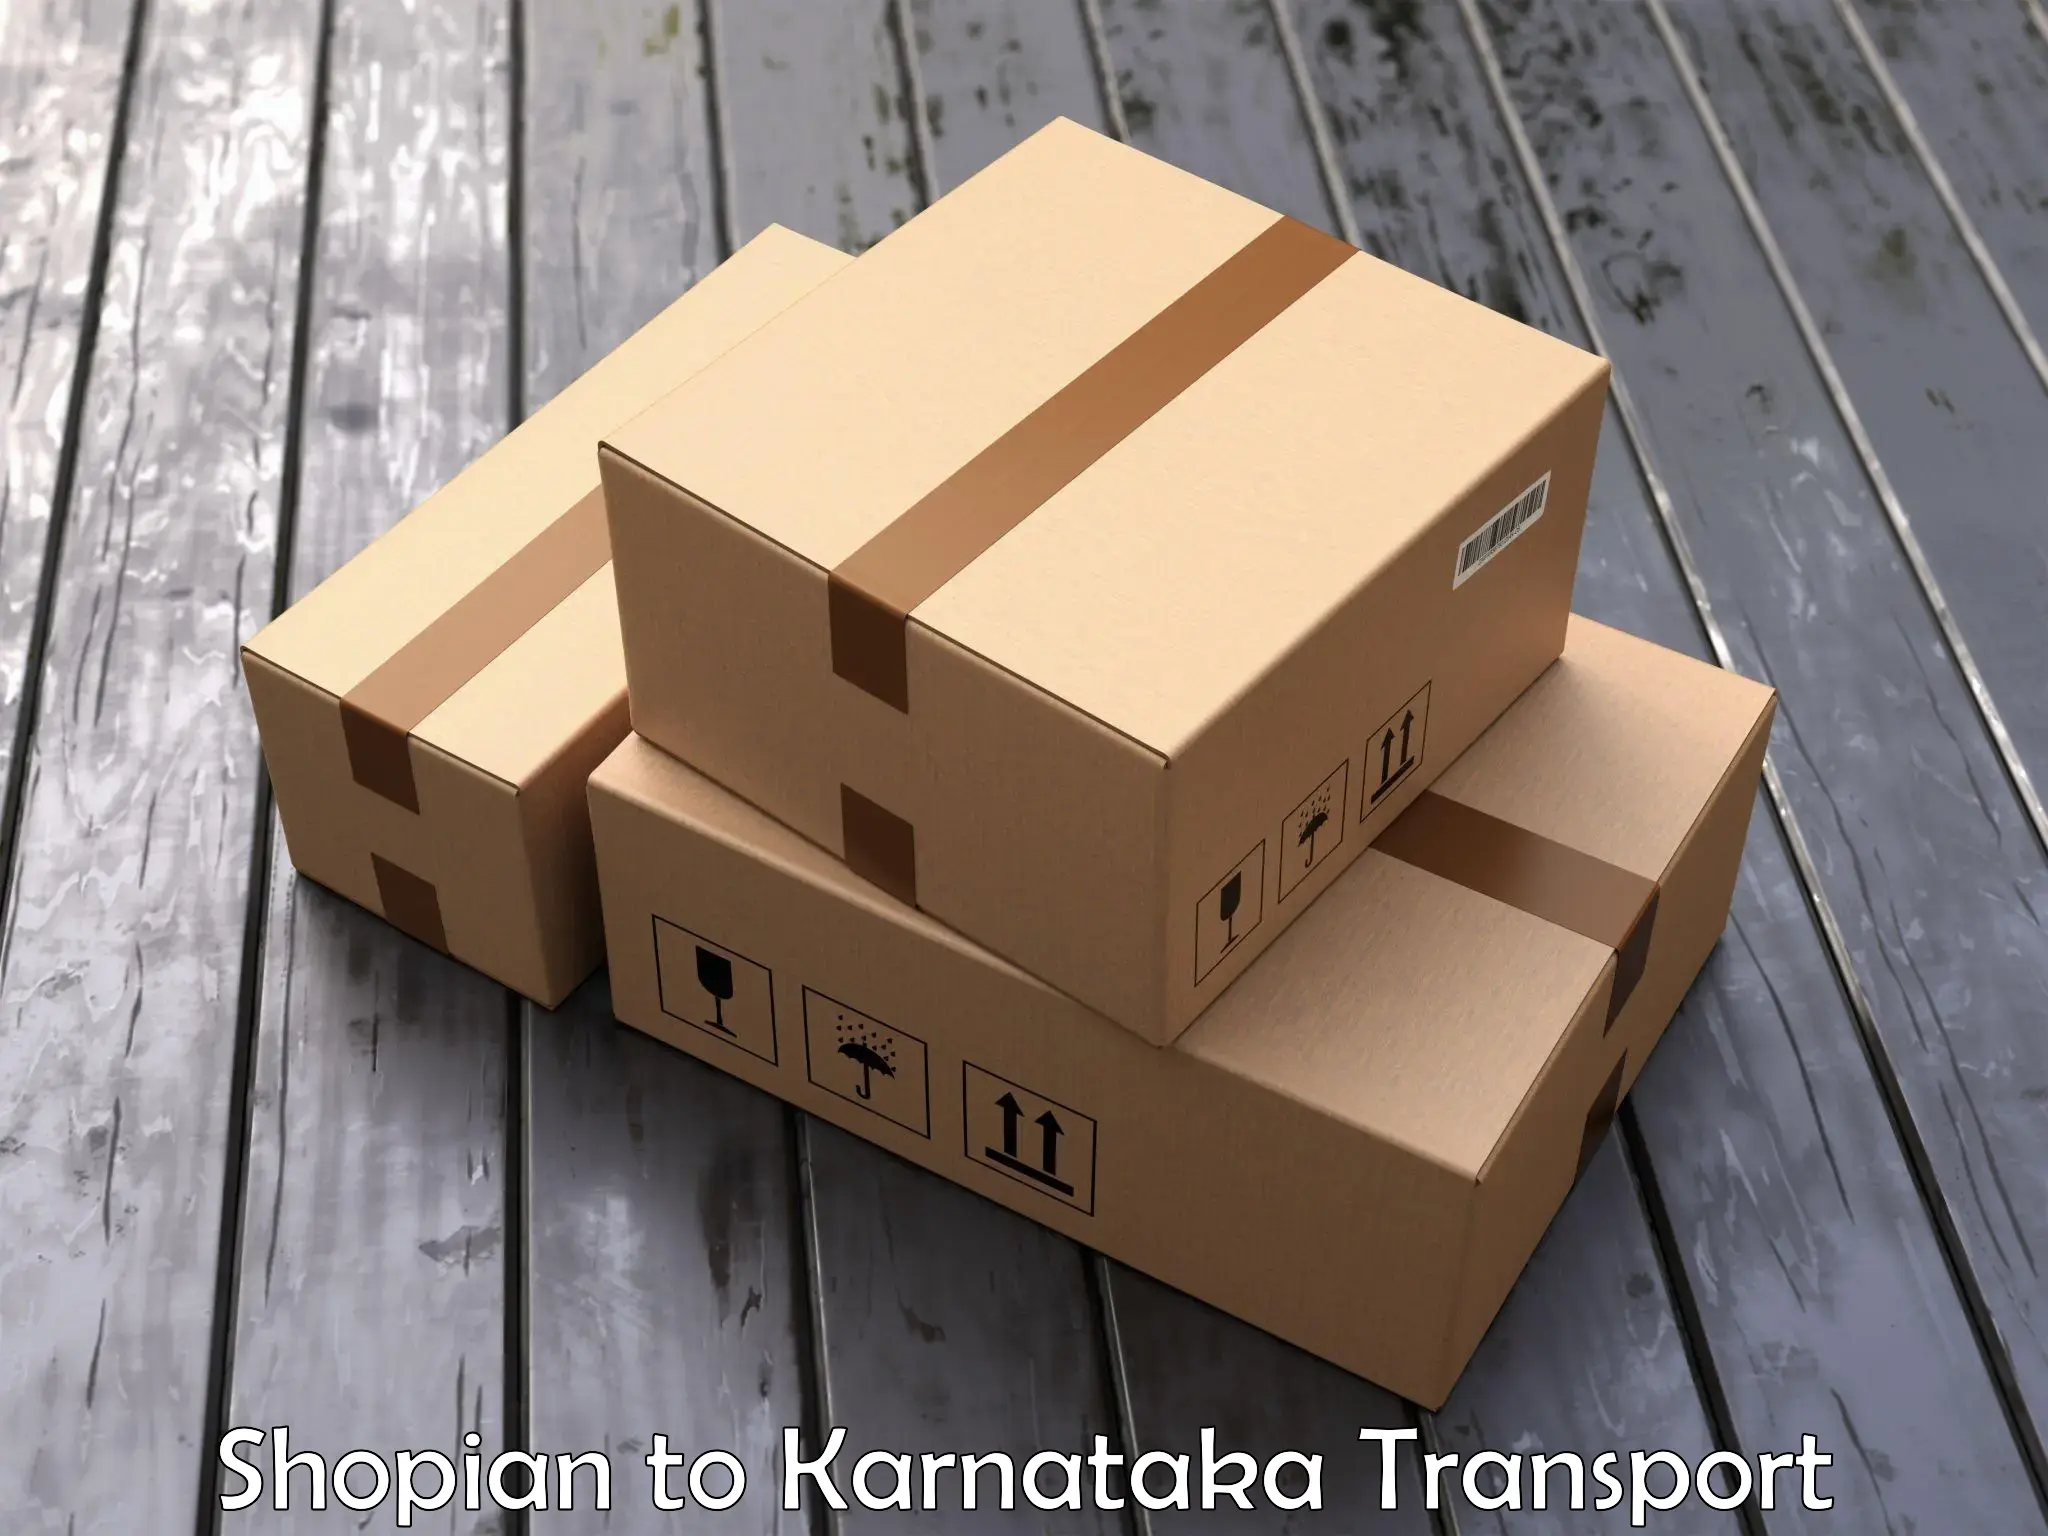 Commercial transport service Shopian to Virajpet